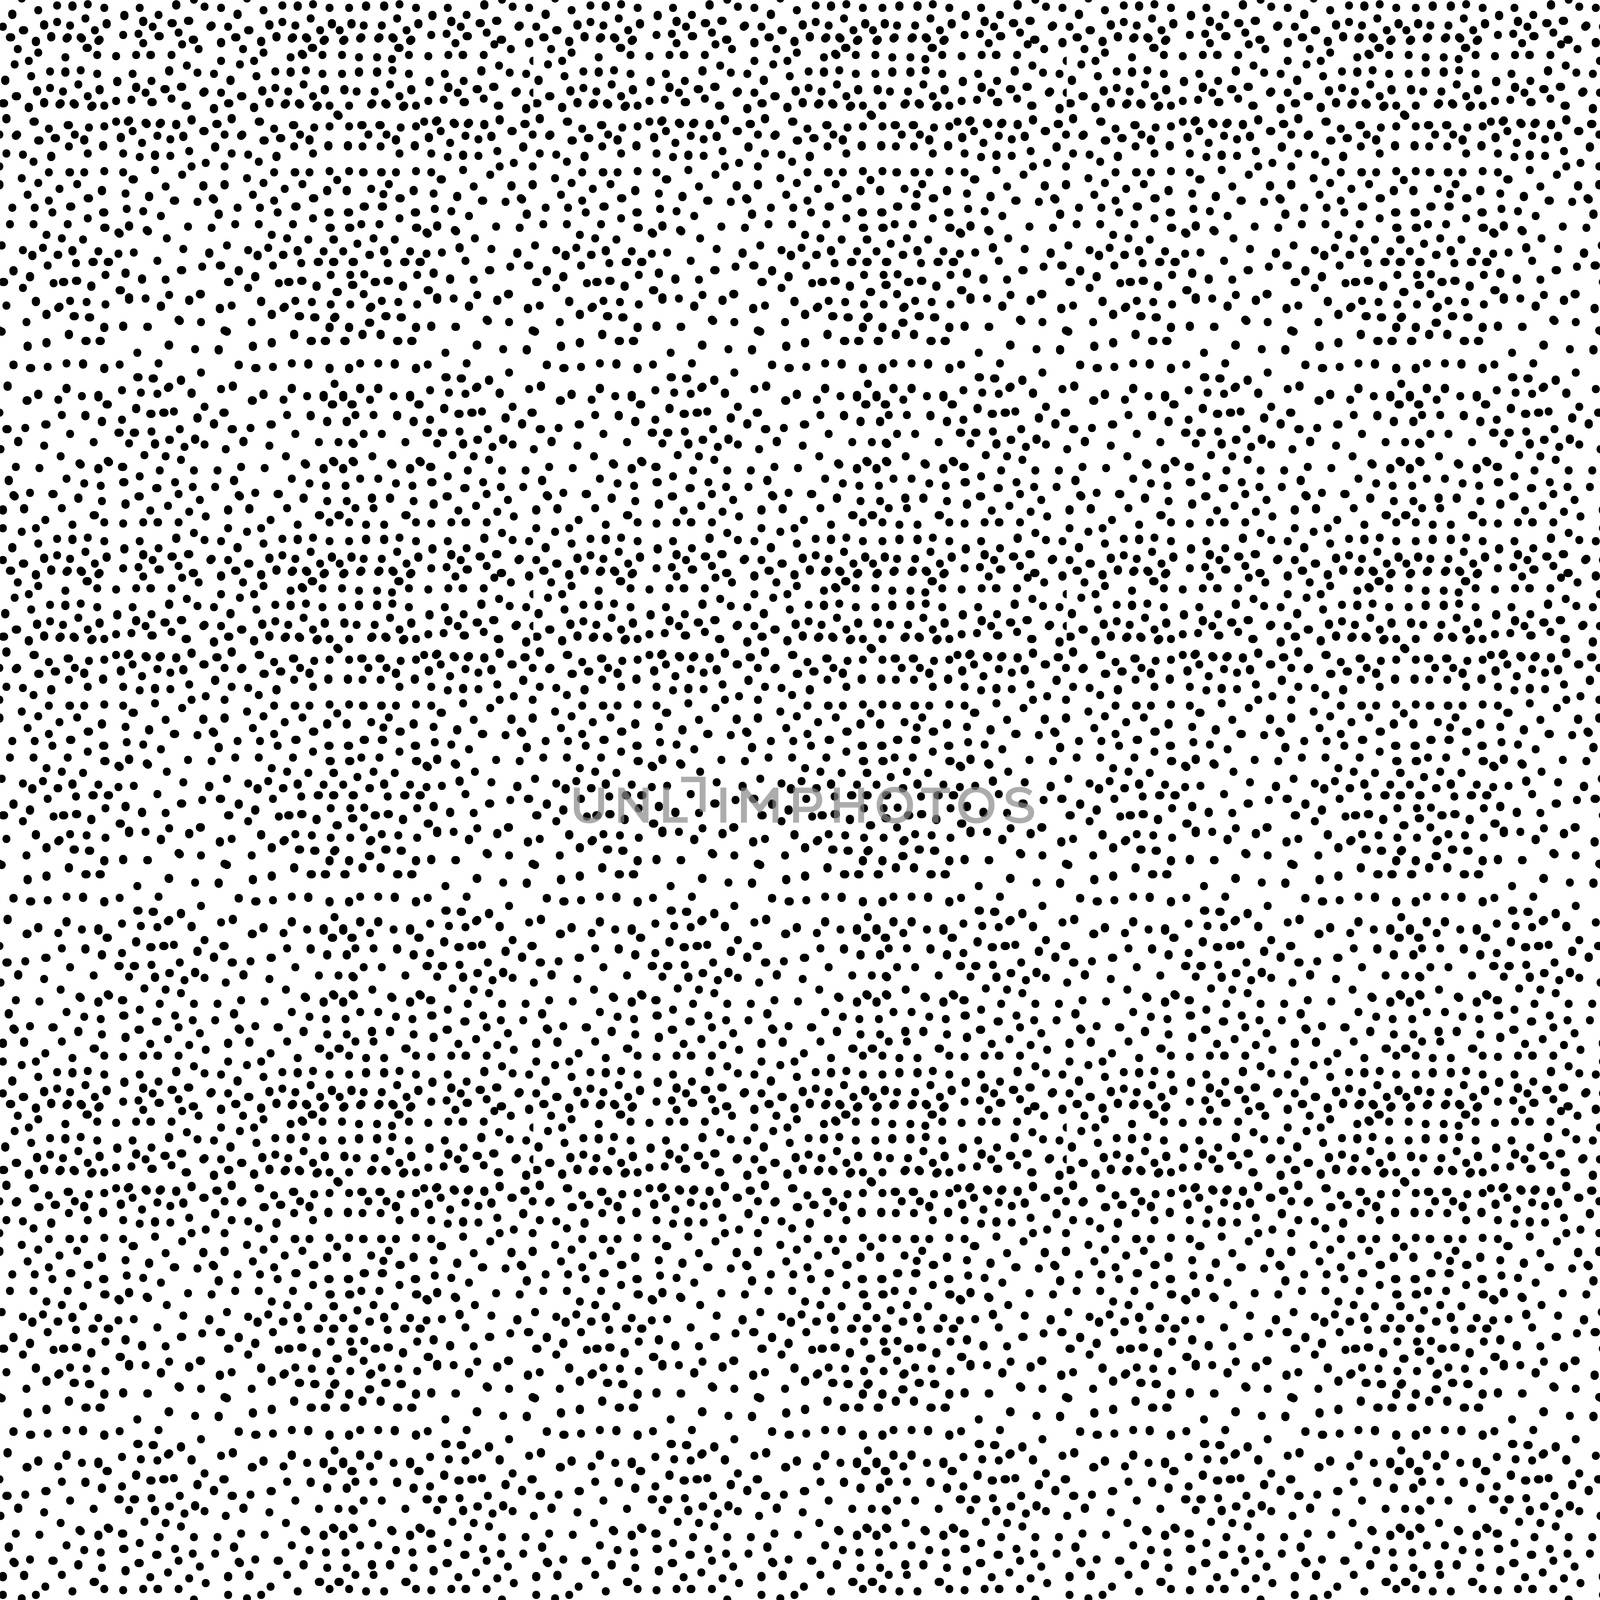 Polka dots pattern , illustration, vector on white background by Morphart